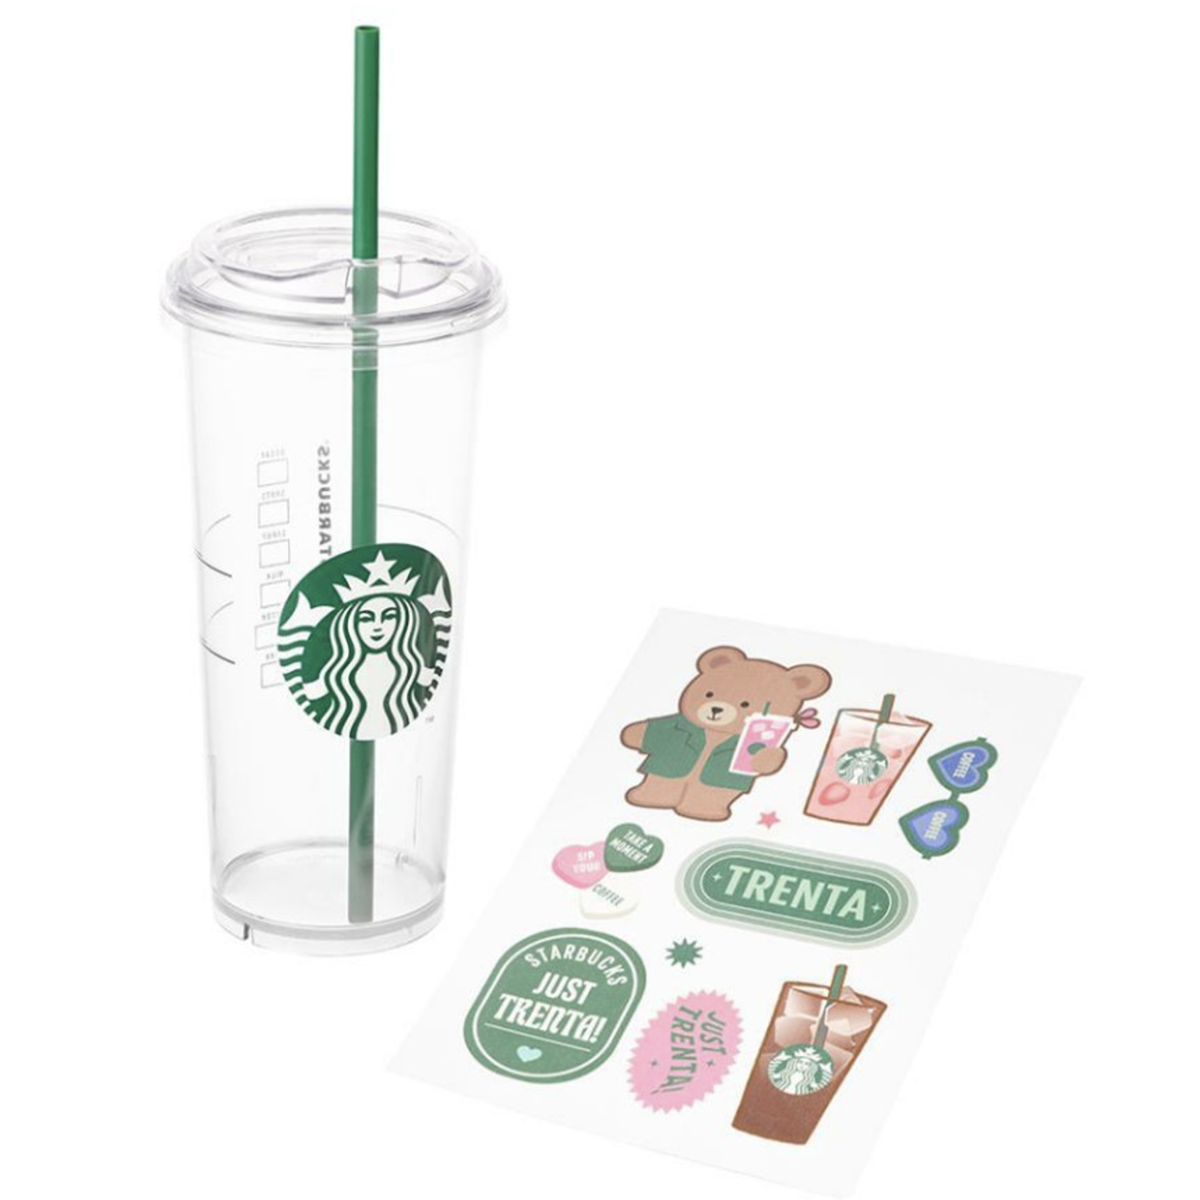 Starbucks Korea Summer 2 Cold Cup Tumbler – MERMAIDS AND MOCHA